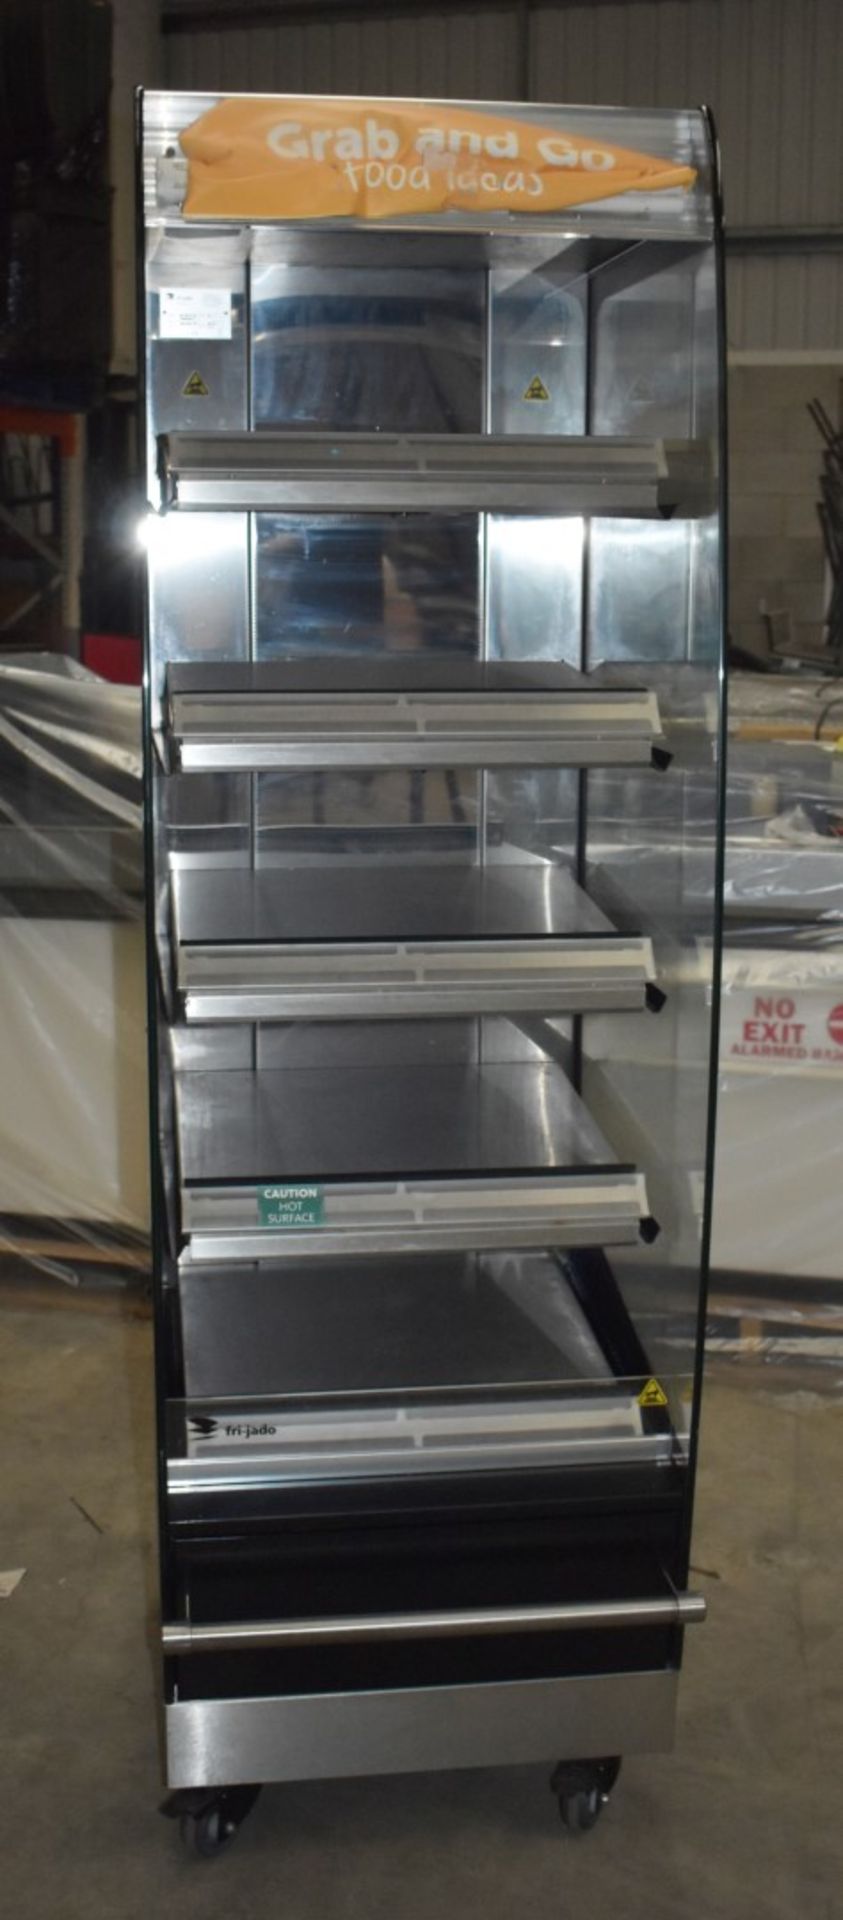 1 x Fri-Jado Four Tier Multi Deck Hot Food Warmer Heated Display Unit - Model MD60-5 SB - - Image 2 of 9